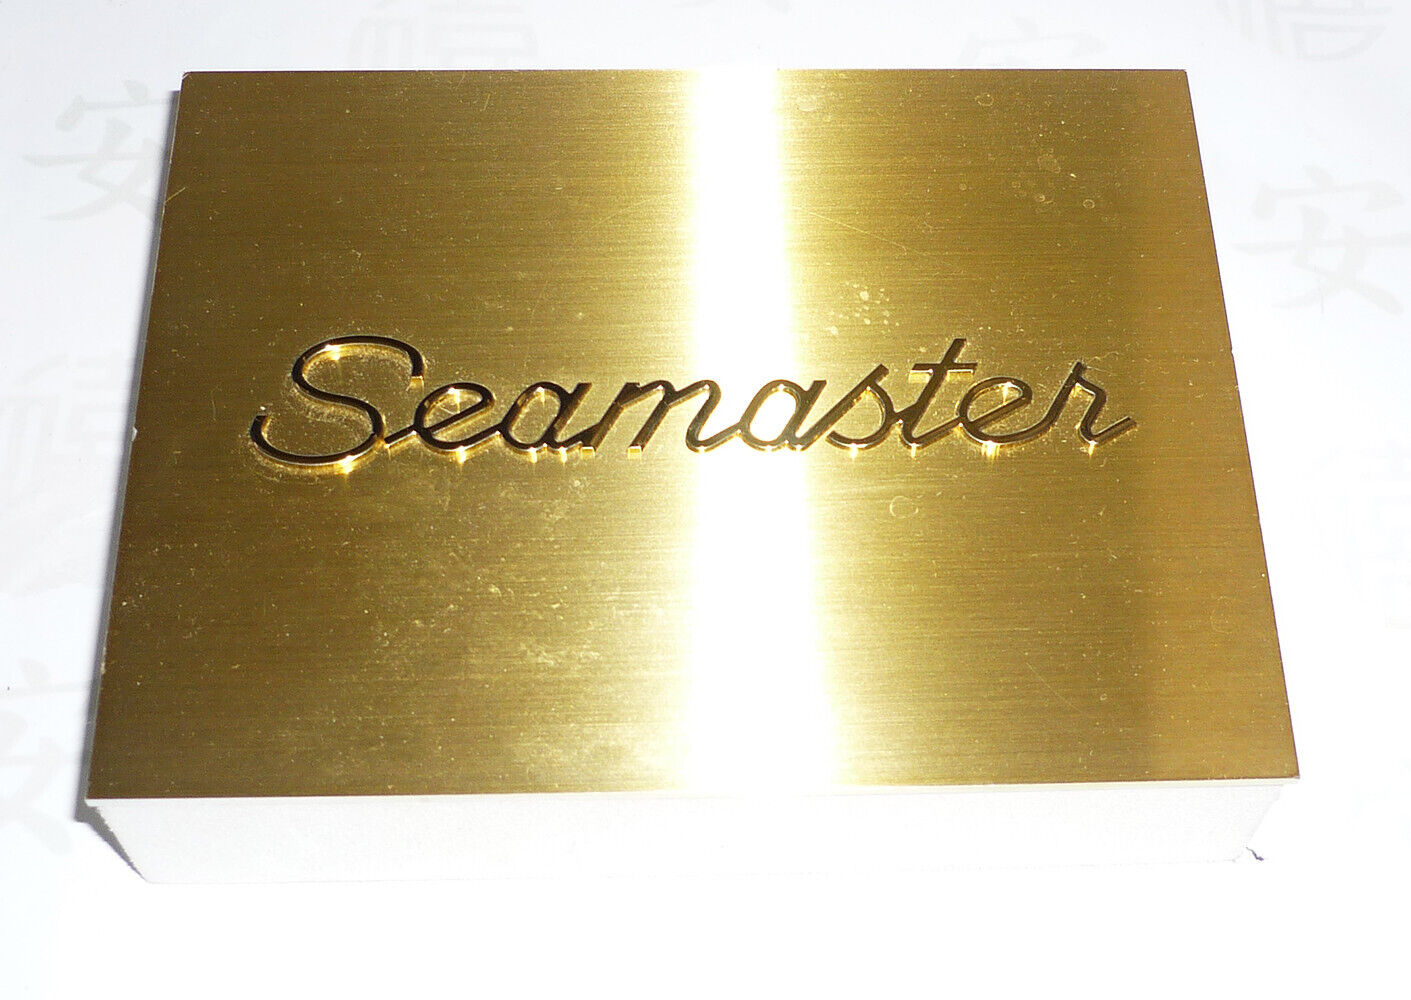 Seamaster Omega Watch Store Brass Logo Display plaque block, 5.6x4.25x1.25